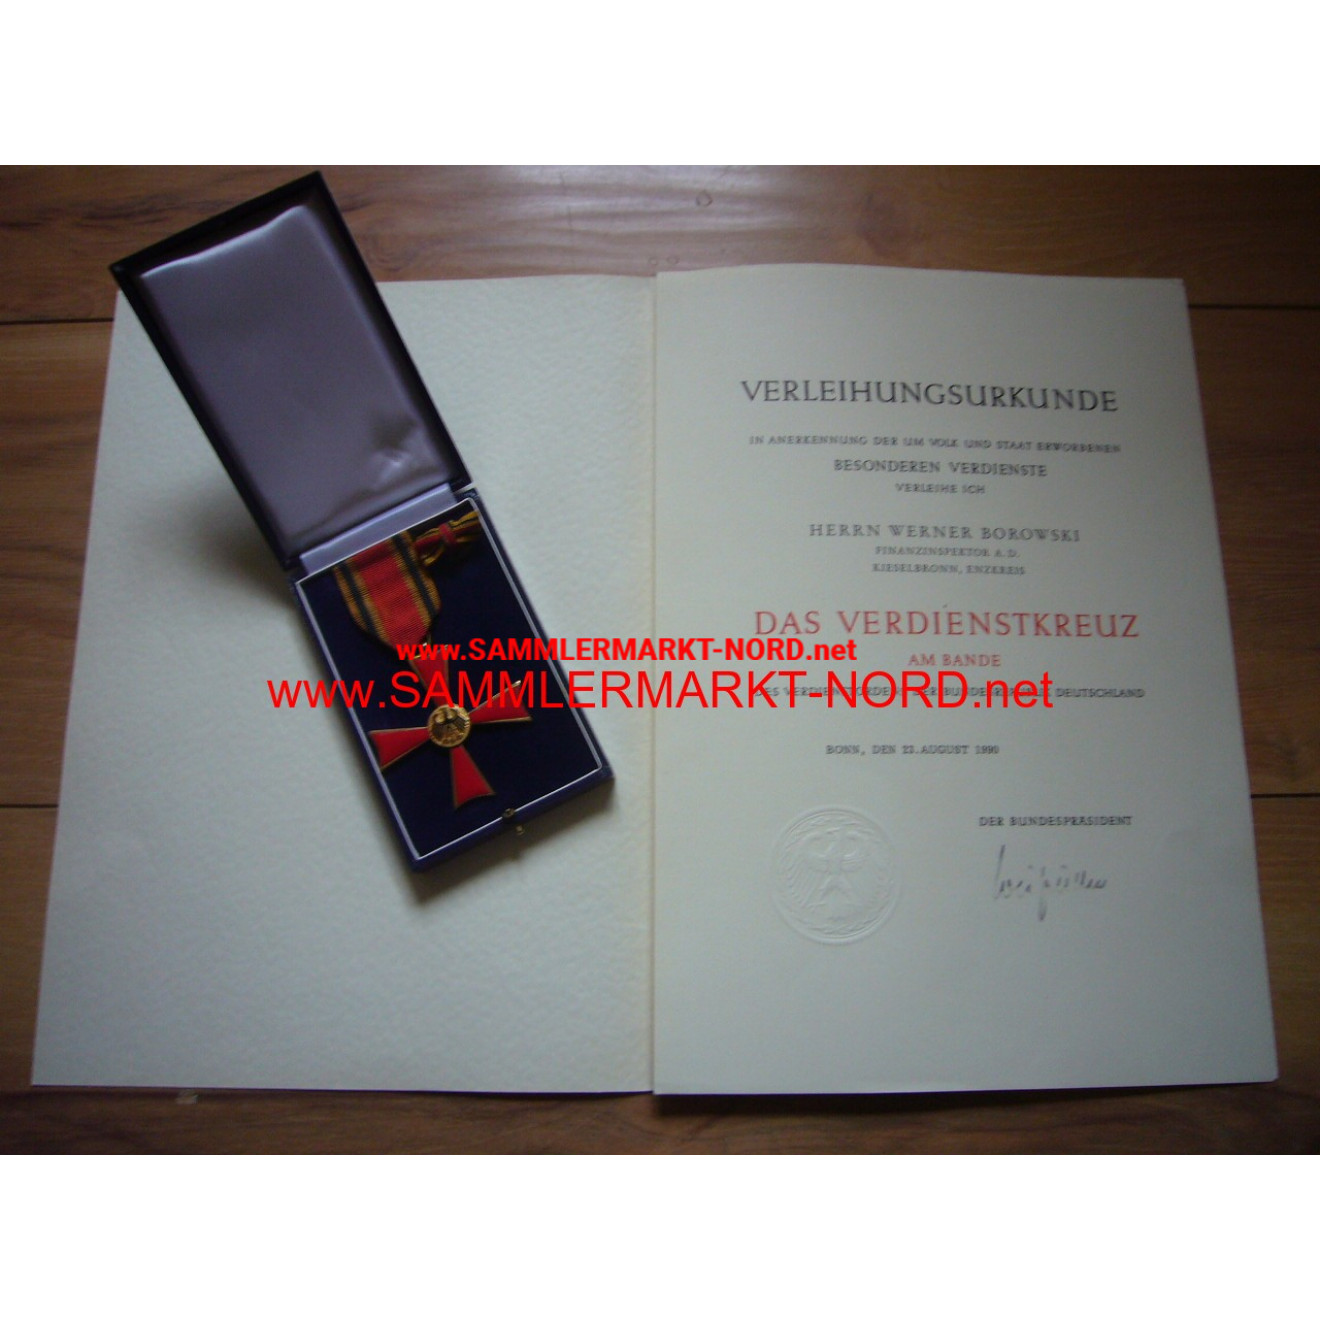 BRD - Federal Cross of Merit on ribbon & award certificate